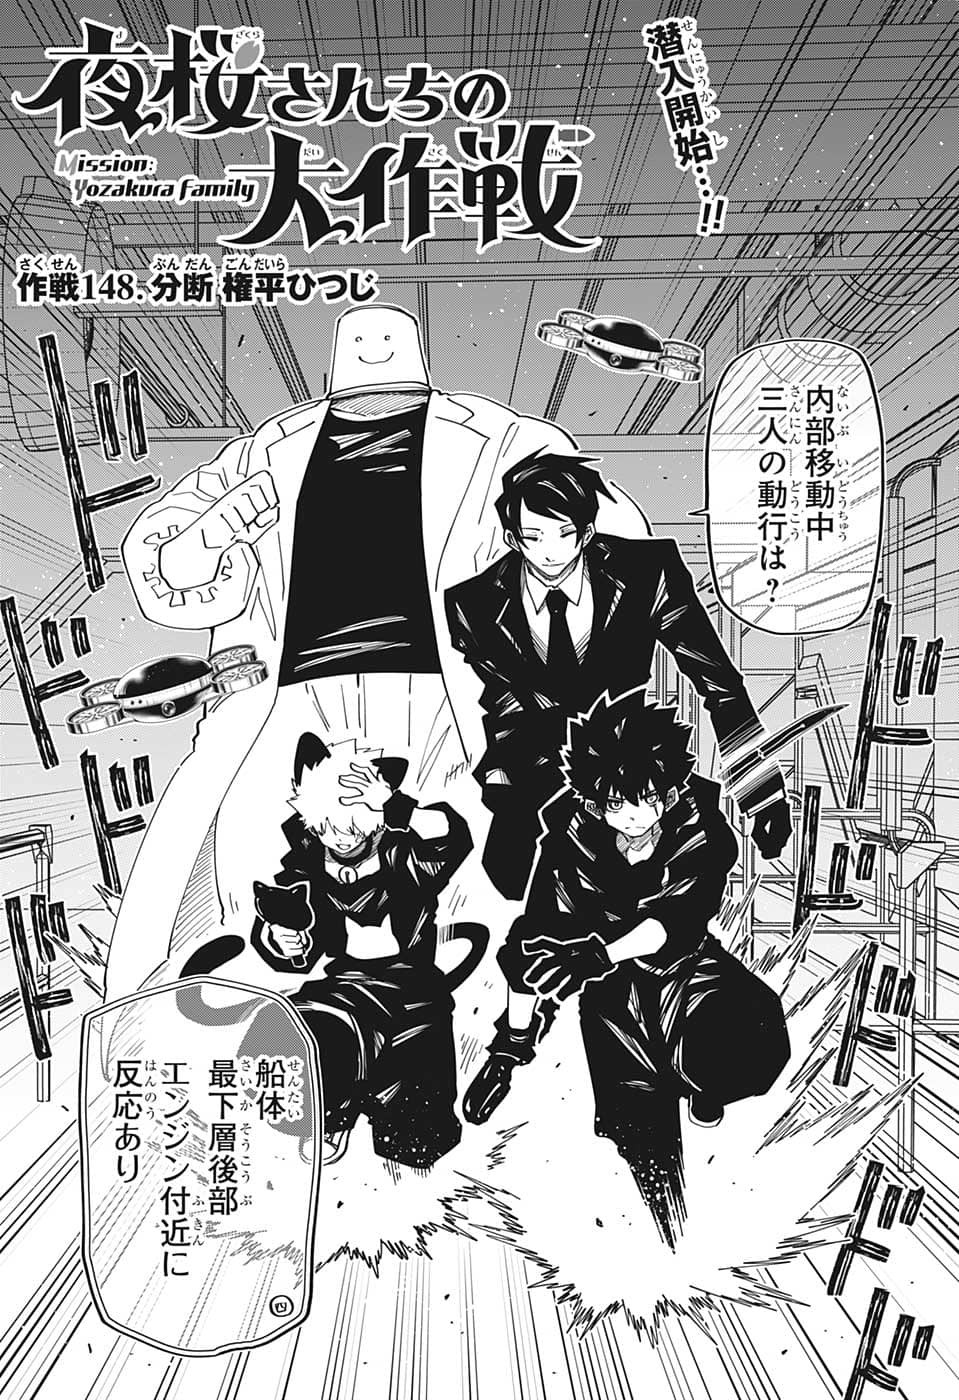 Sakuga ONE 「作画1️⃣」 on X: A terceira temporada de Hitori no